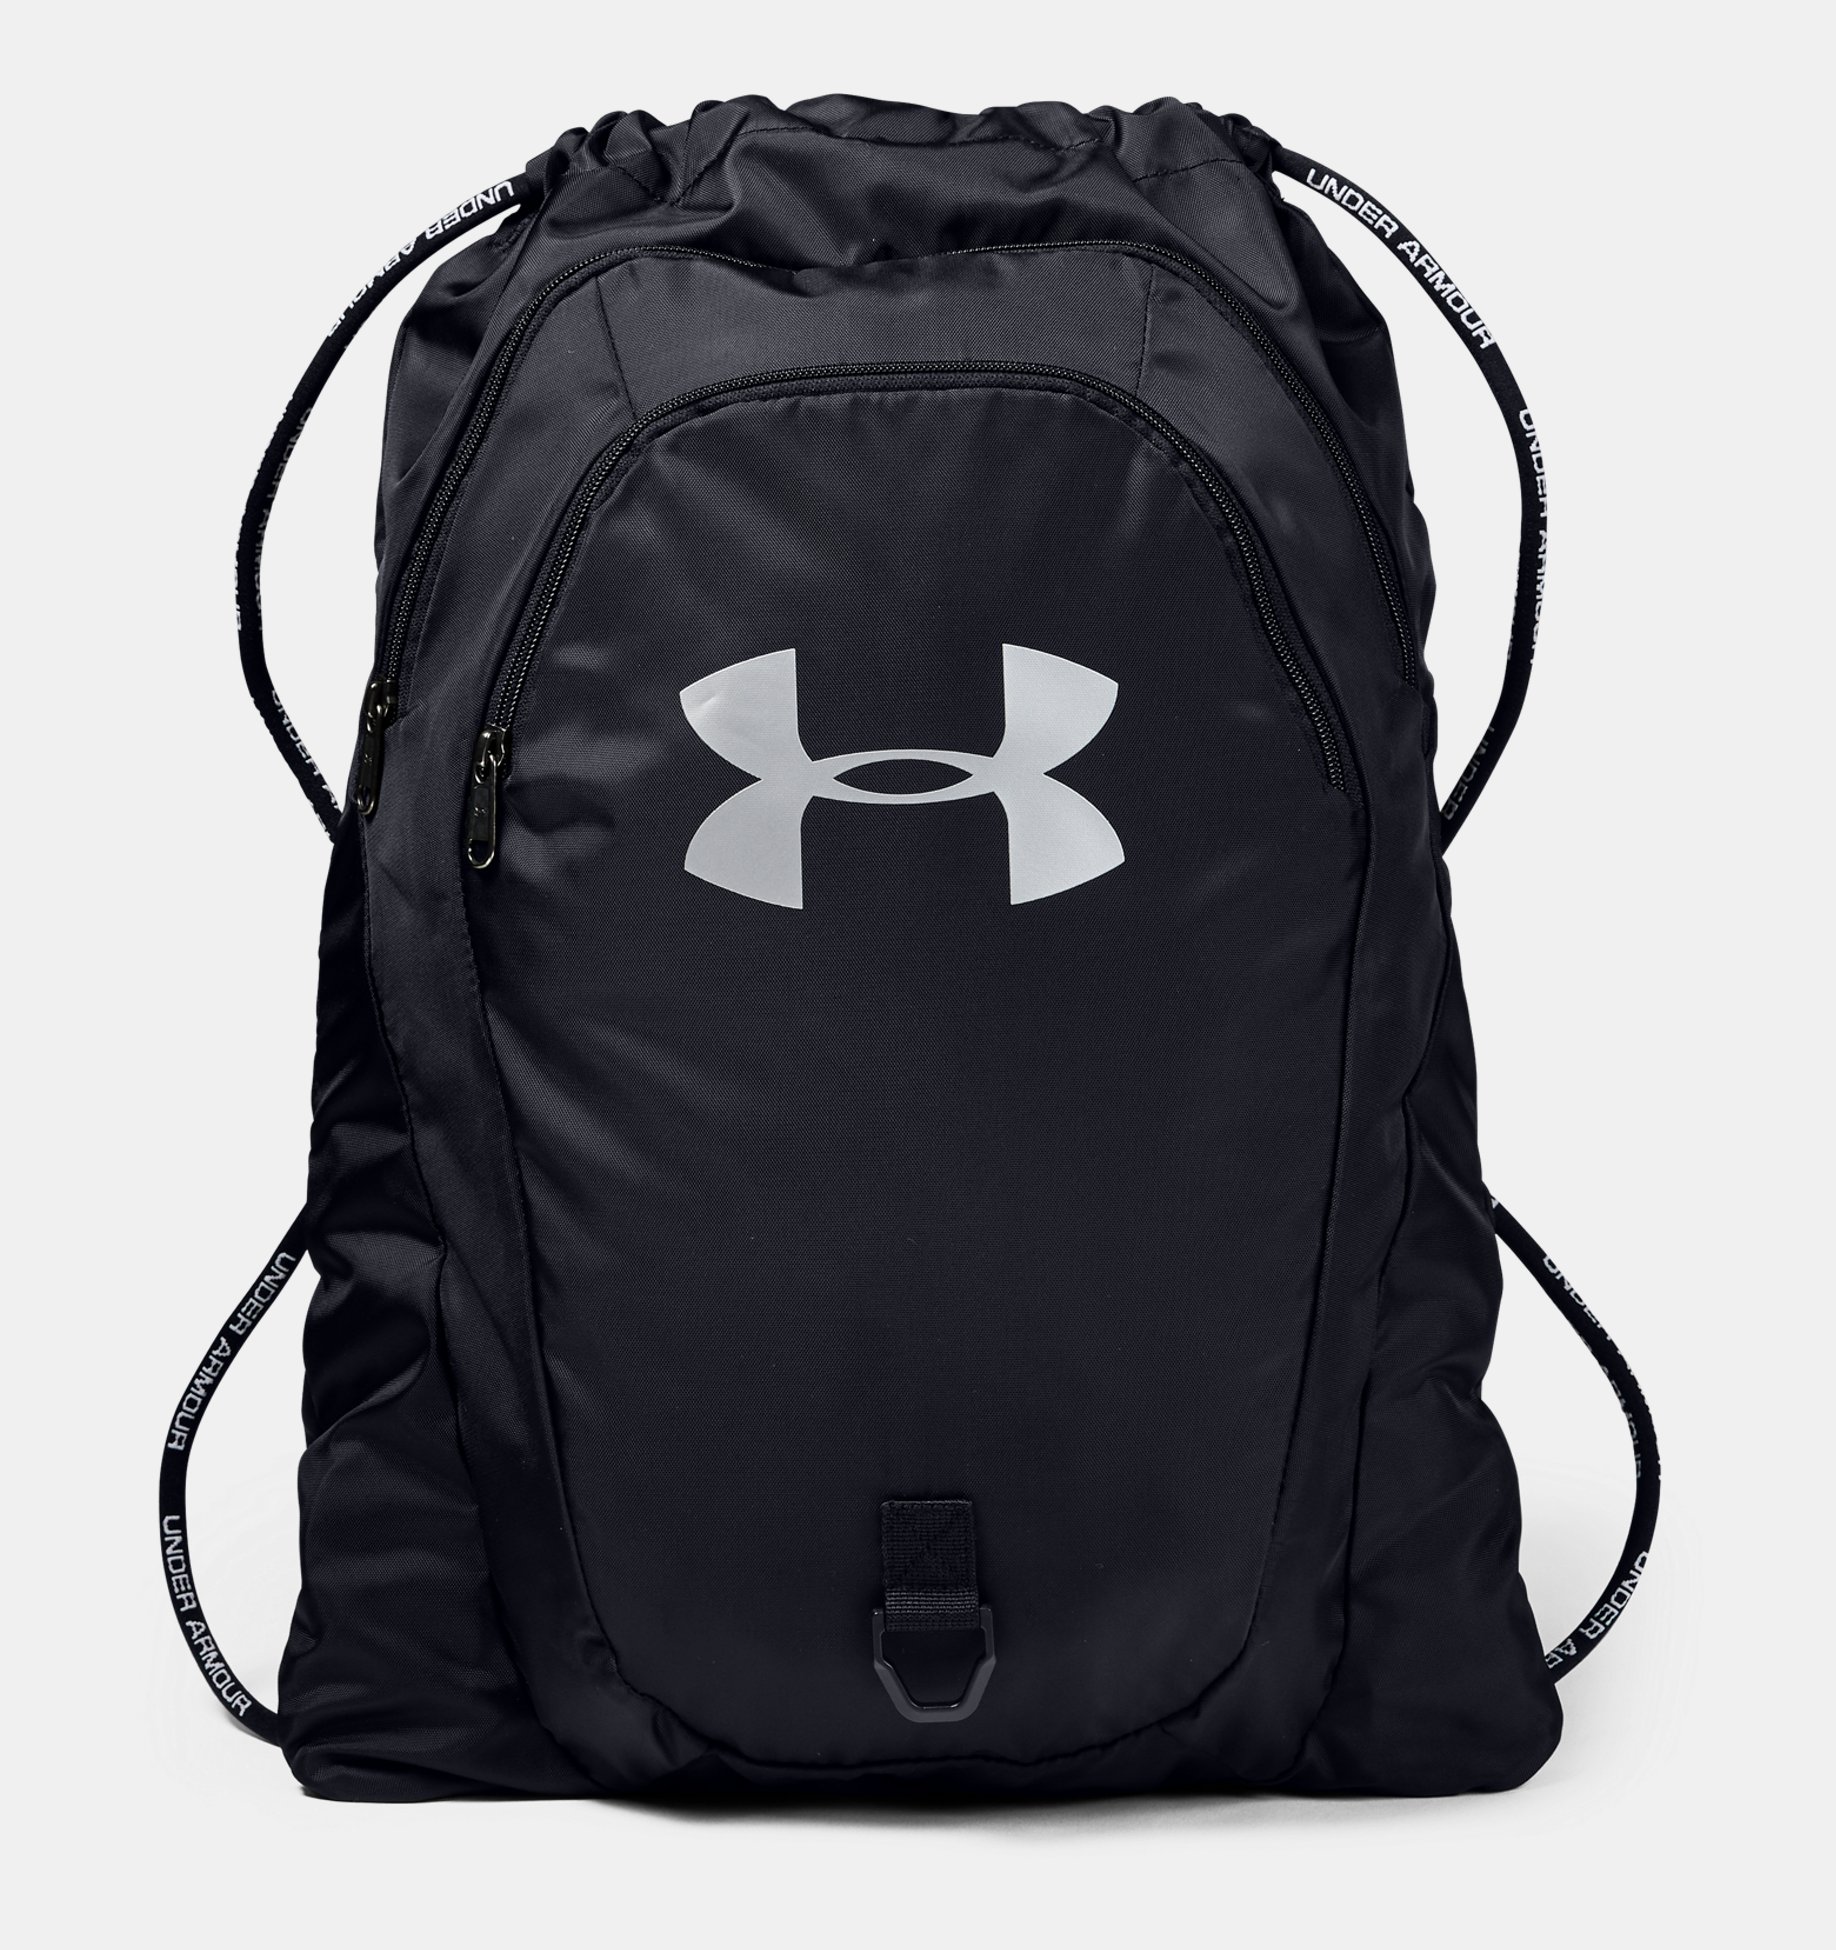 Under Armour Undeniable Sackpack UA Drawstring Backpack Sack Pack Sport Gym Bag 